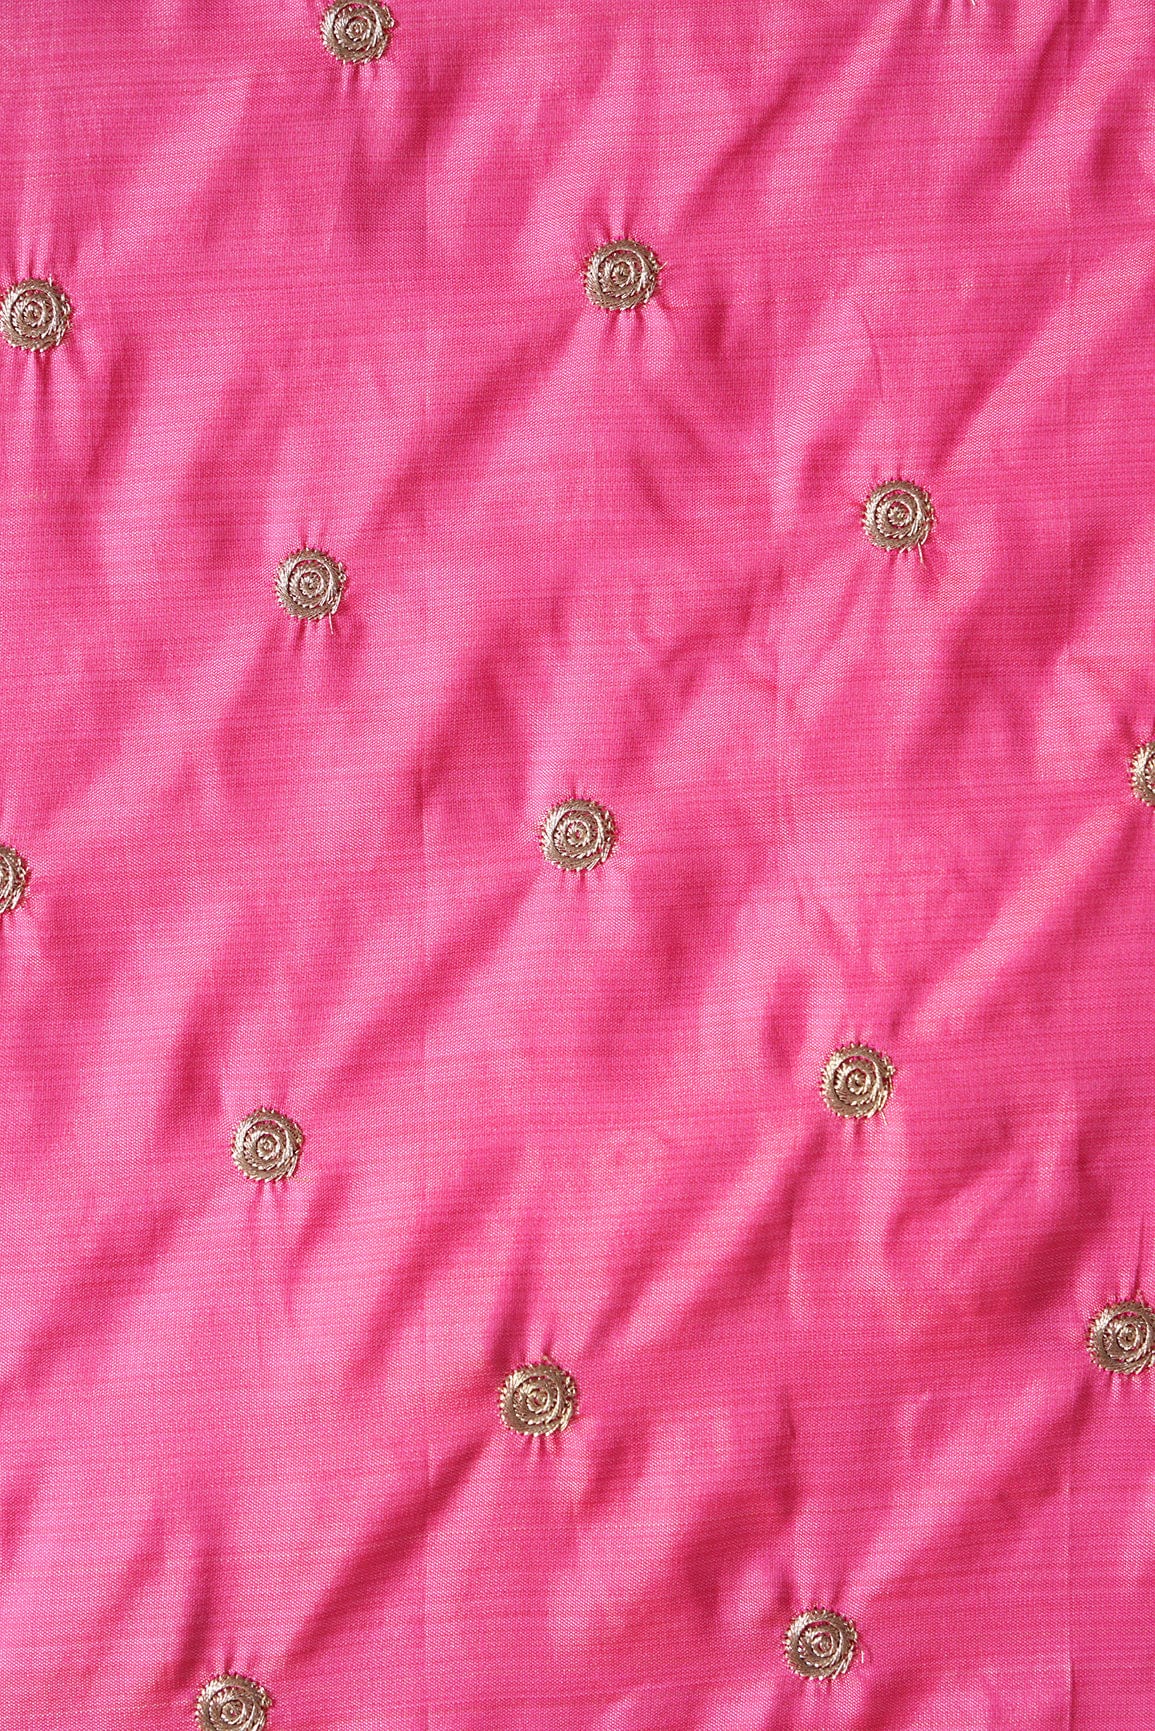 doeraa Embroidery Fabrics Gold Zari Small Motif Embroidery Work On Dark Pink Bamboo Silk Fabric